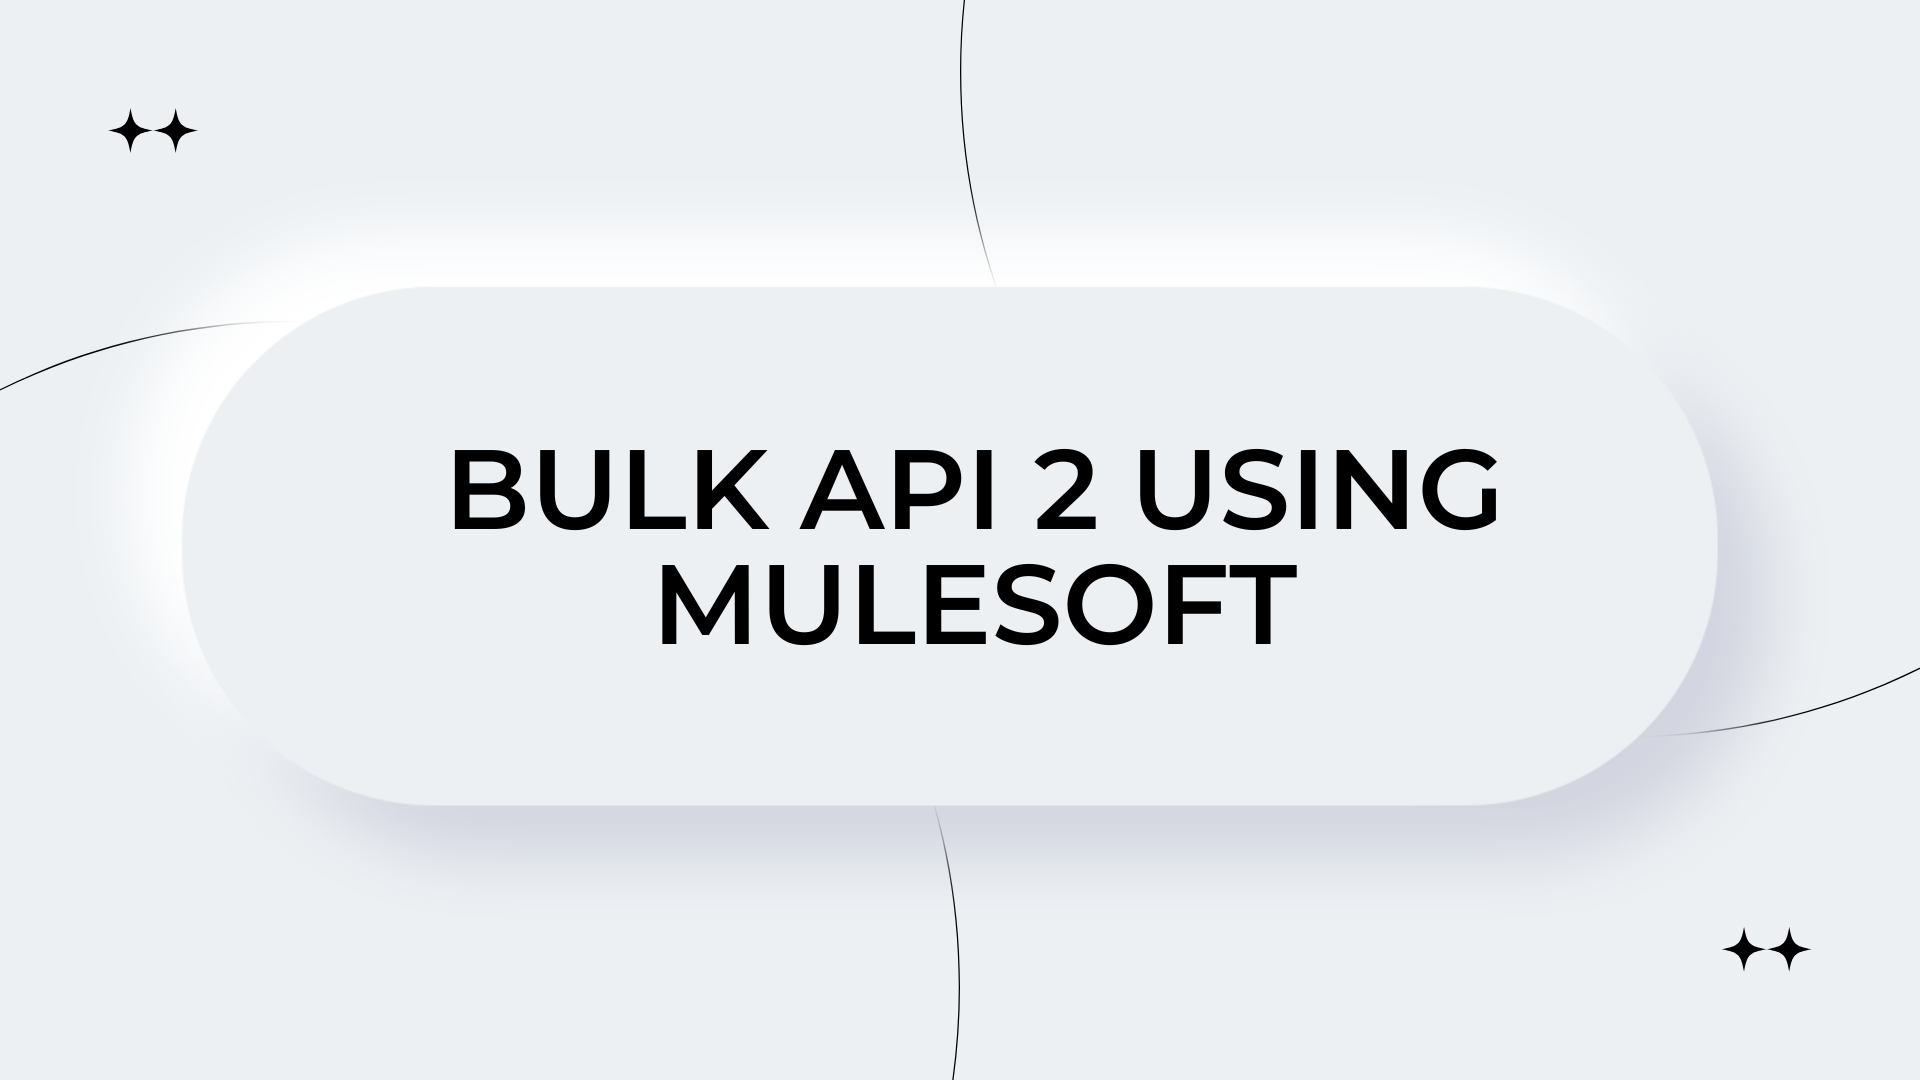 Bulk API 2 using MuleSoft